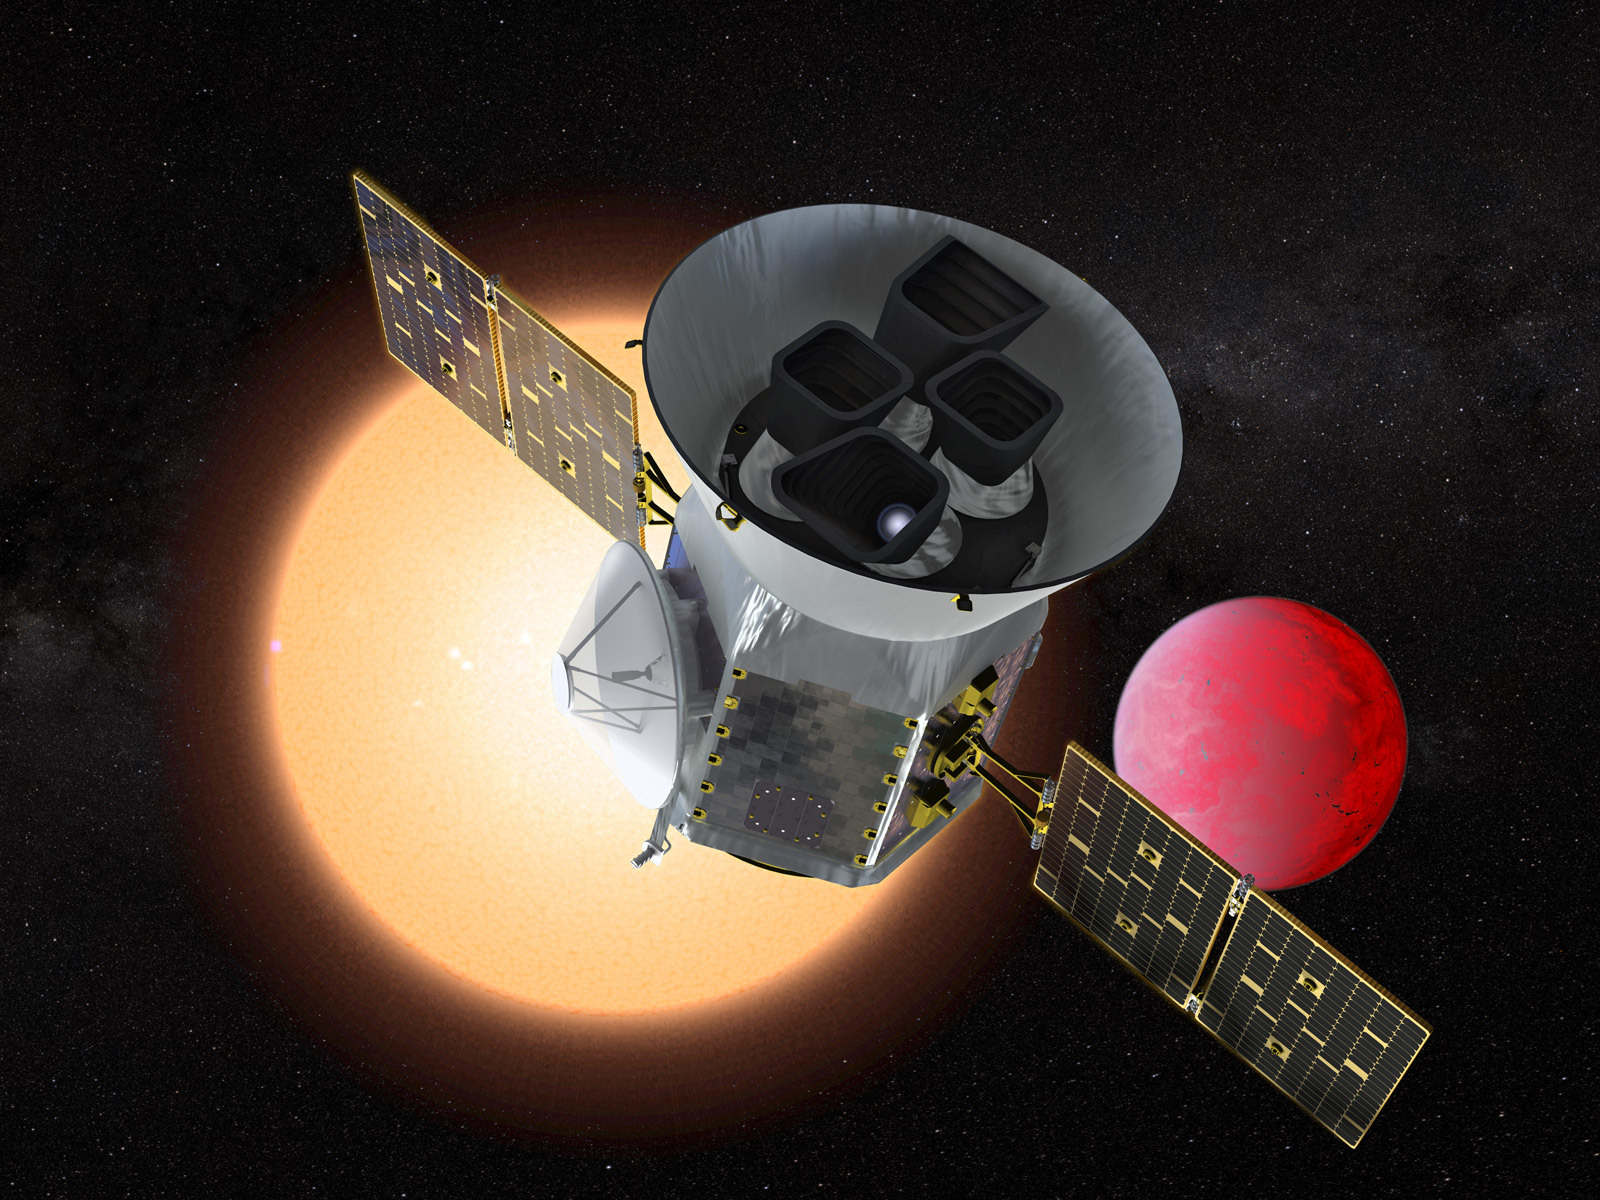 Illustration of the Transiting Exoplanet Survey Telescope (TESS).